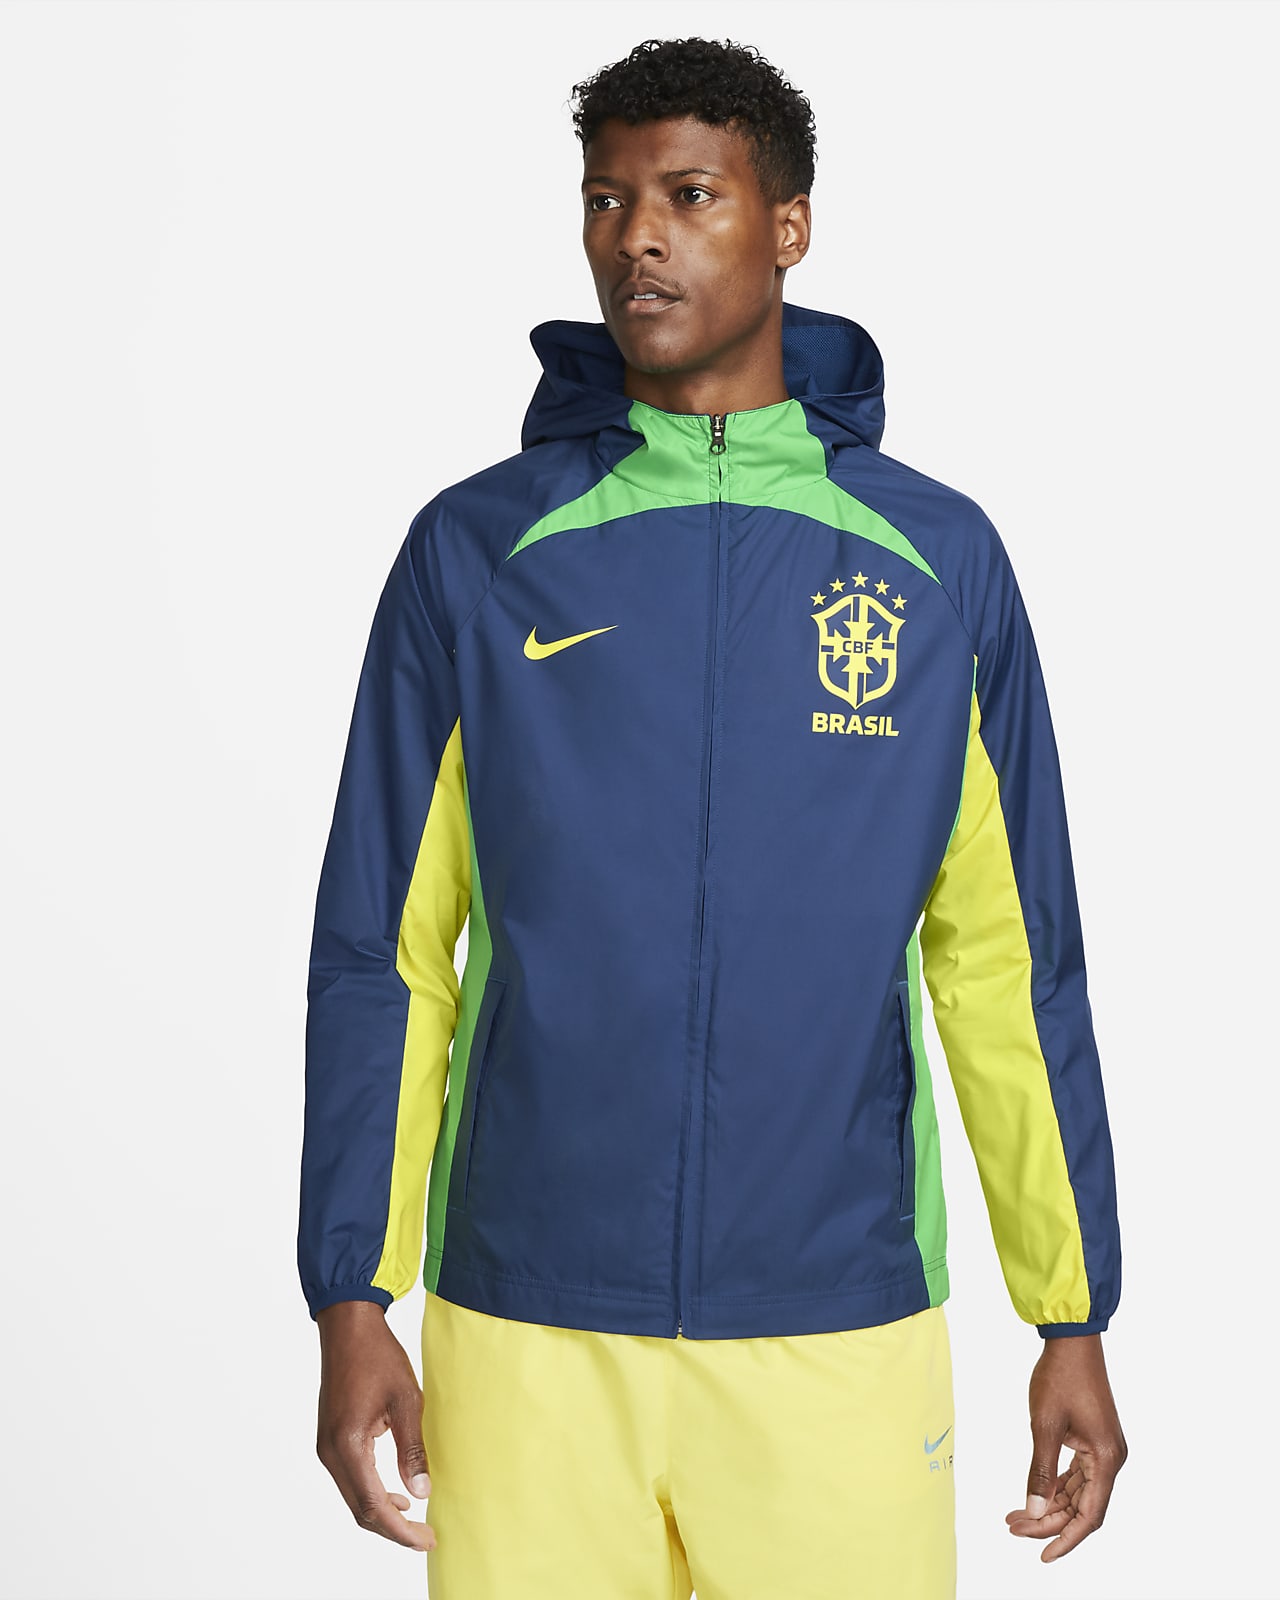 AWF Men's Full-Zip Soccer Jacket. Nike.com